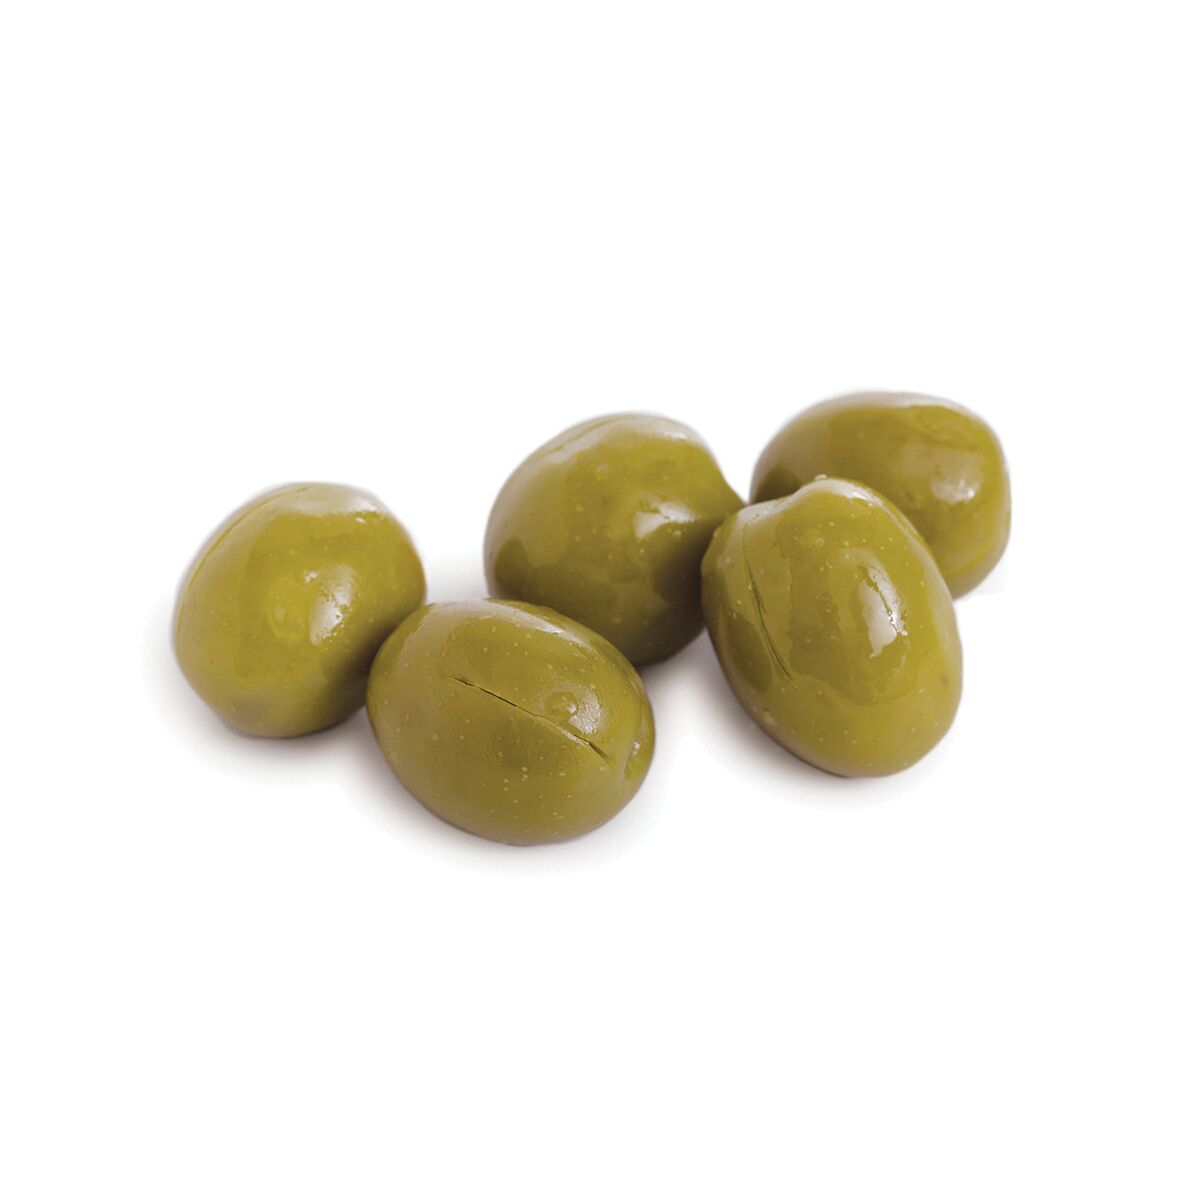 Cracked Green Olives